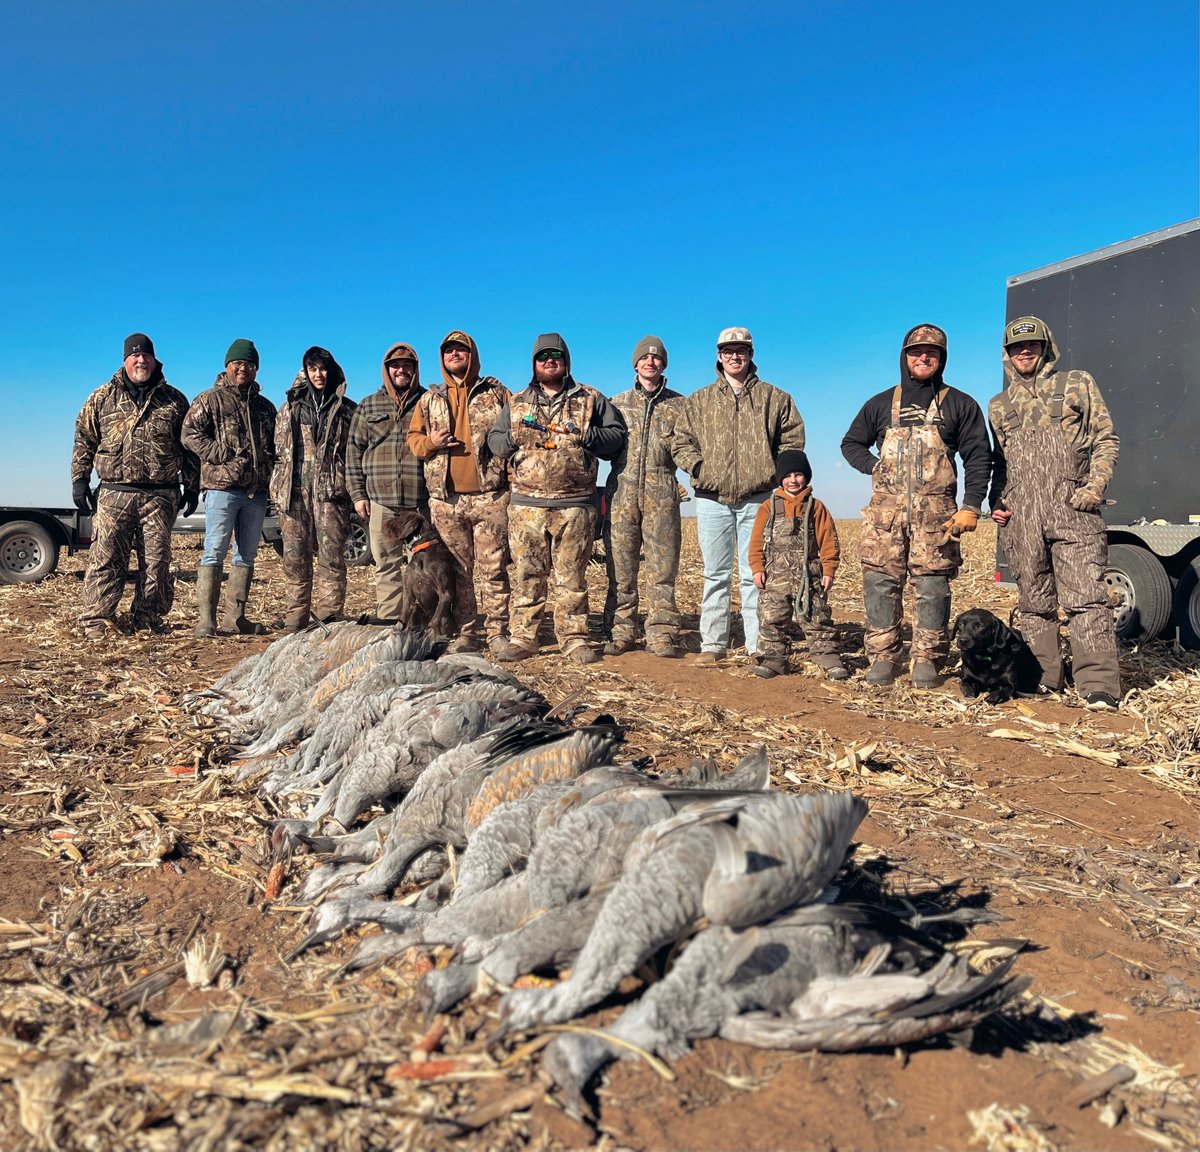 Group of hunters with deceased sandhill cranes in Lubbock, TX